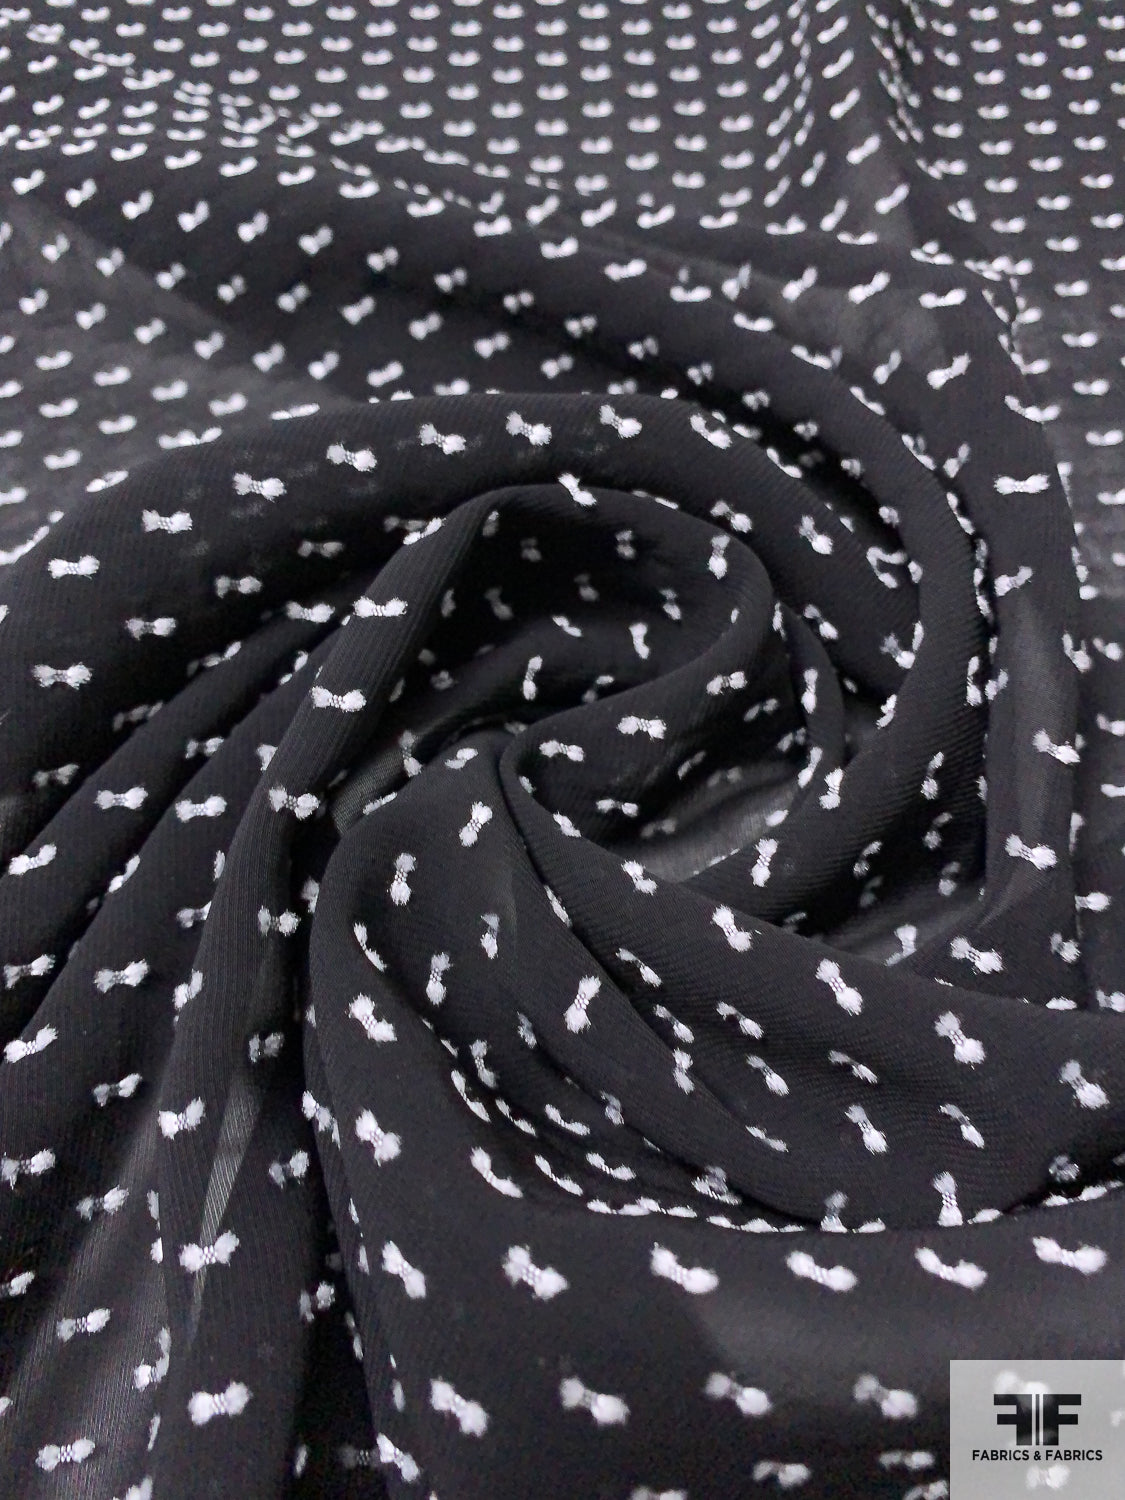 Bow-Tie Clip Rayon Chiffon - Black / White